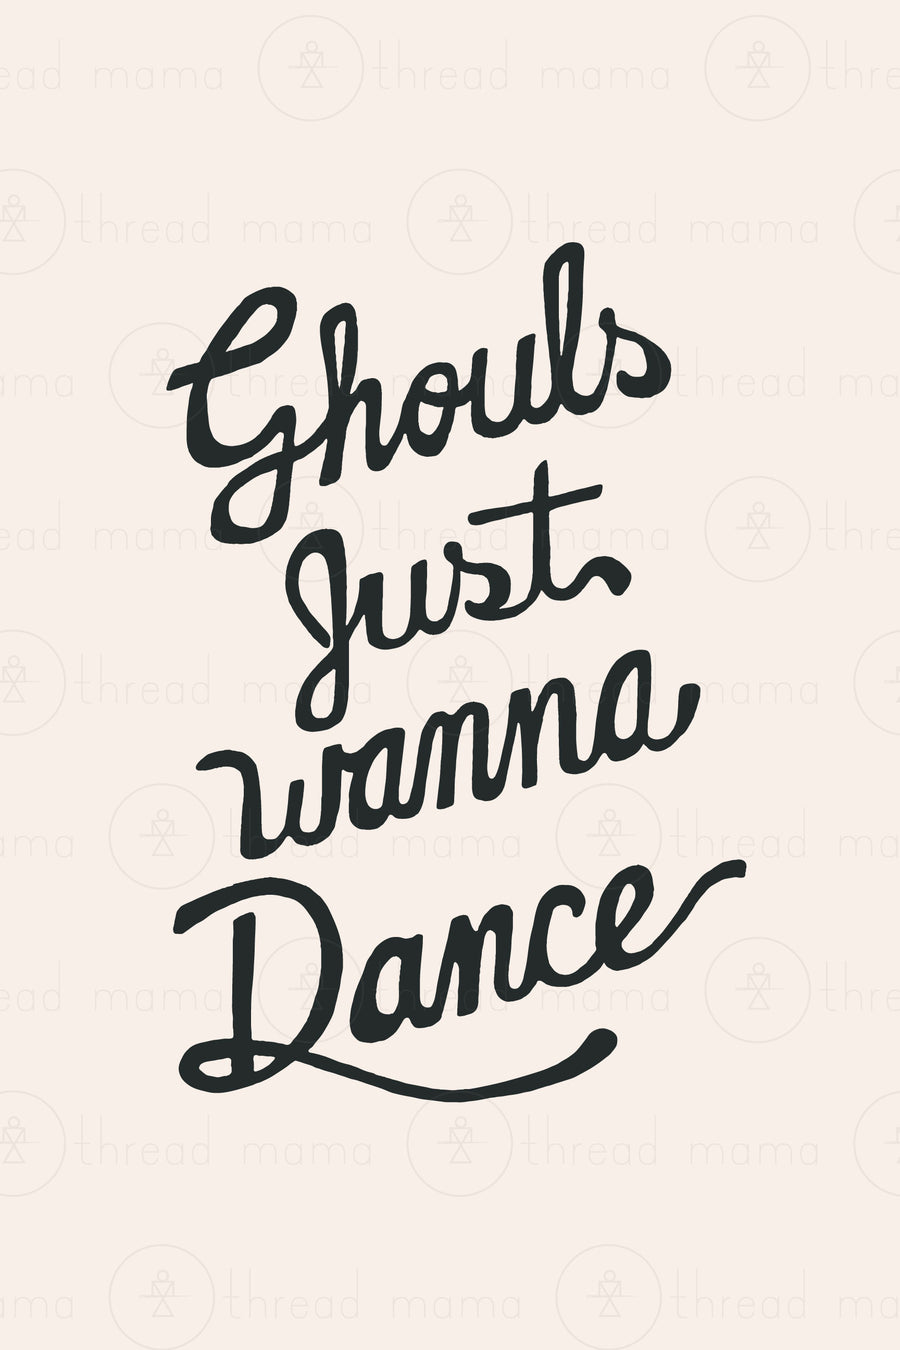 Ghouls Just Wanna Dance (Set 2) / OPAL + OLIVE X THREAD MAMA